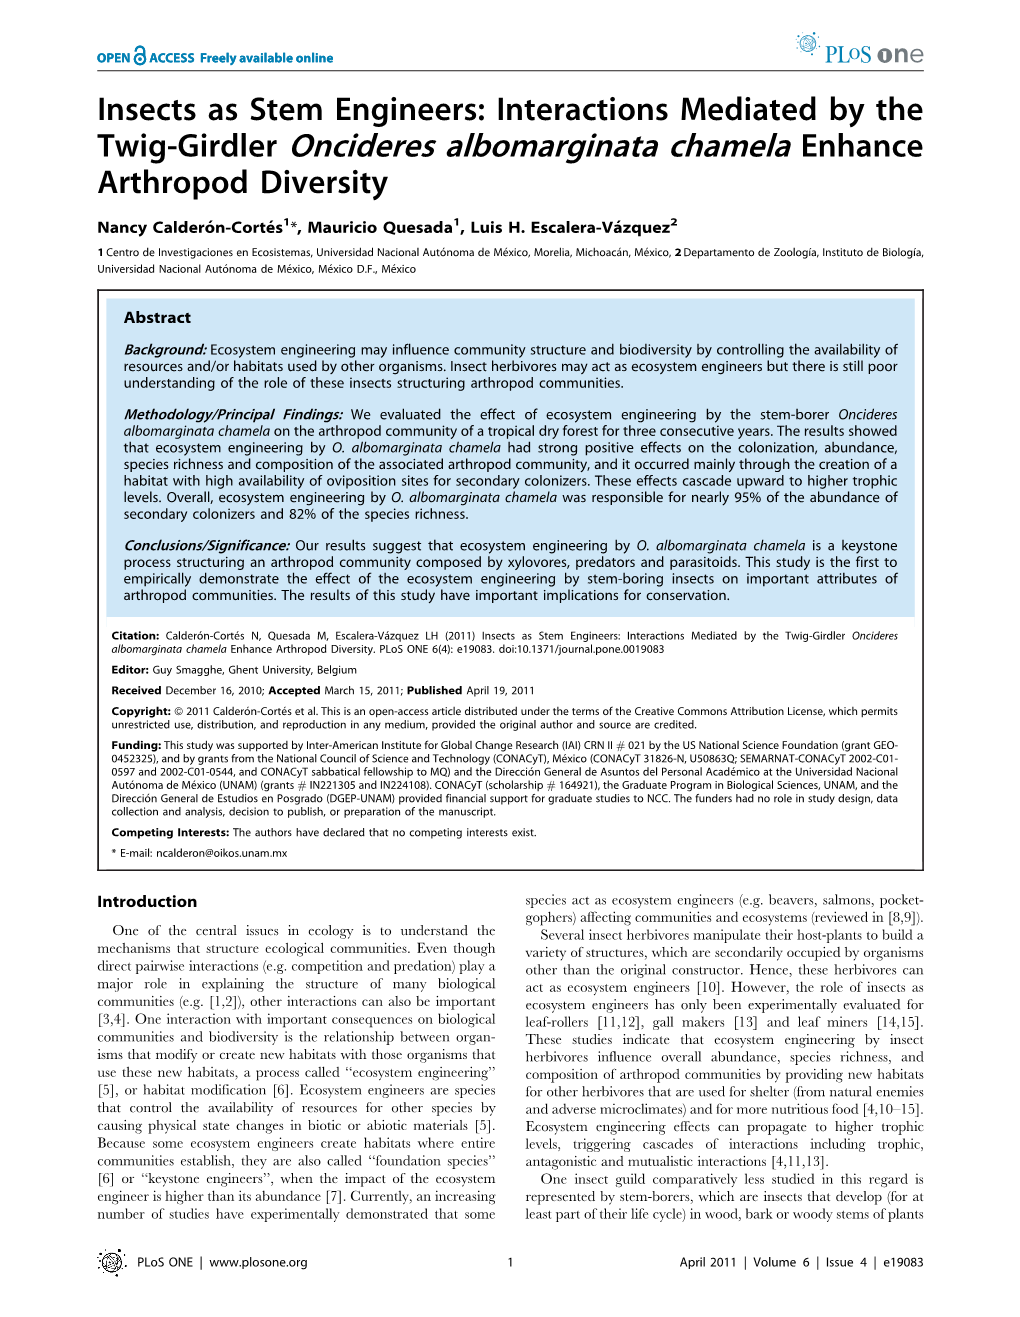 Twig-Girdler Oncideres Albomarginata Chamela Enhance Arthropod Diversity